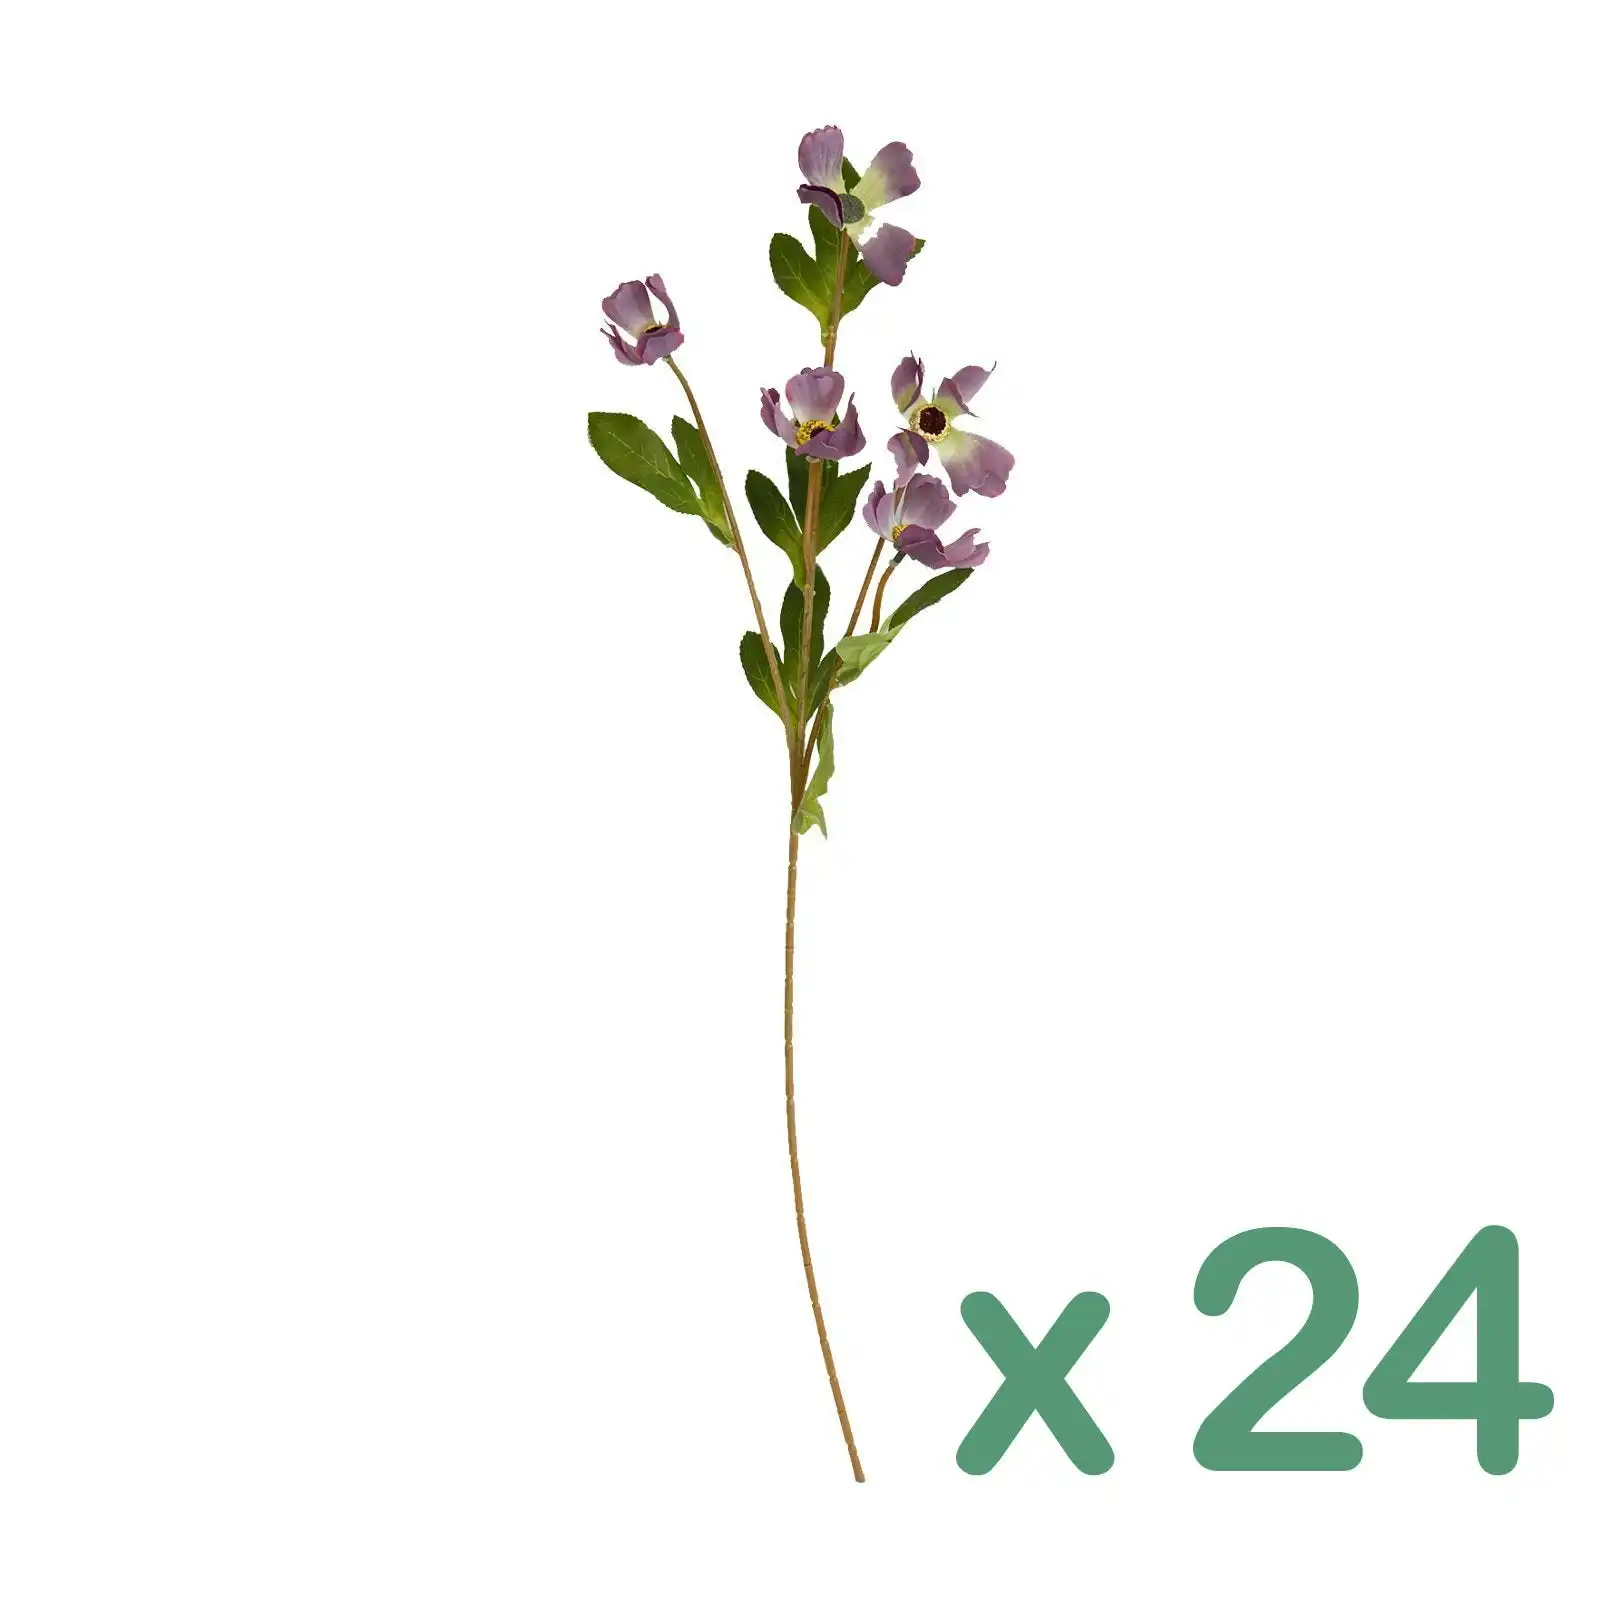 Carton of 24 - Artificial Flowers - Wild Poppy PURPLE 60cm